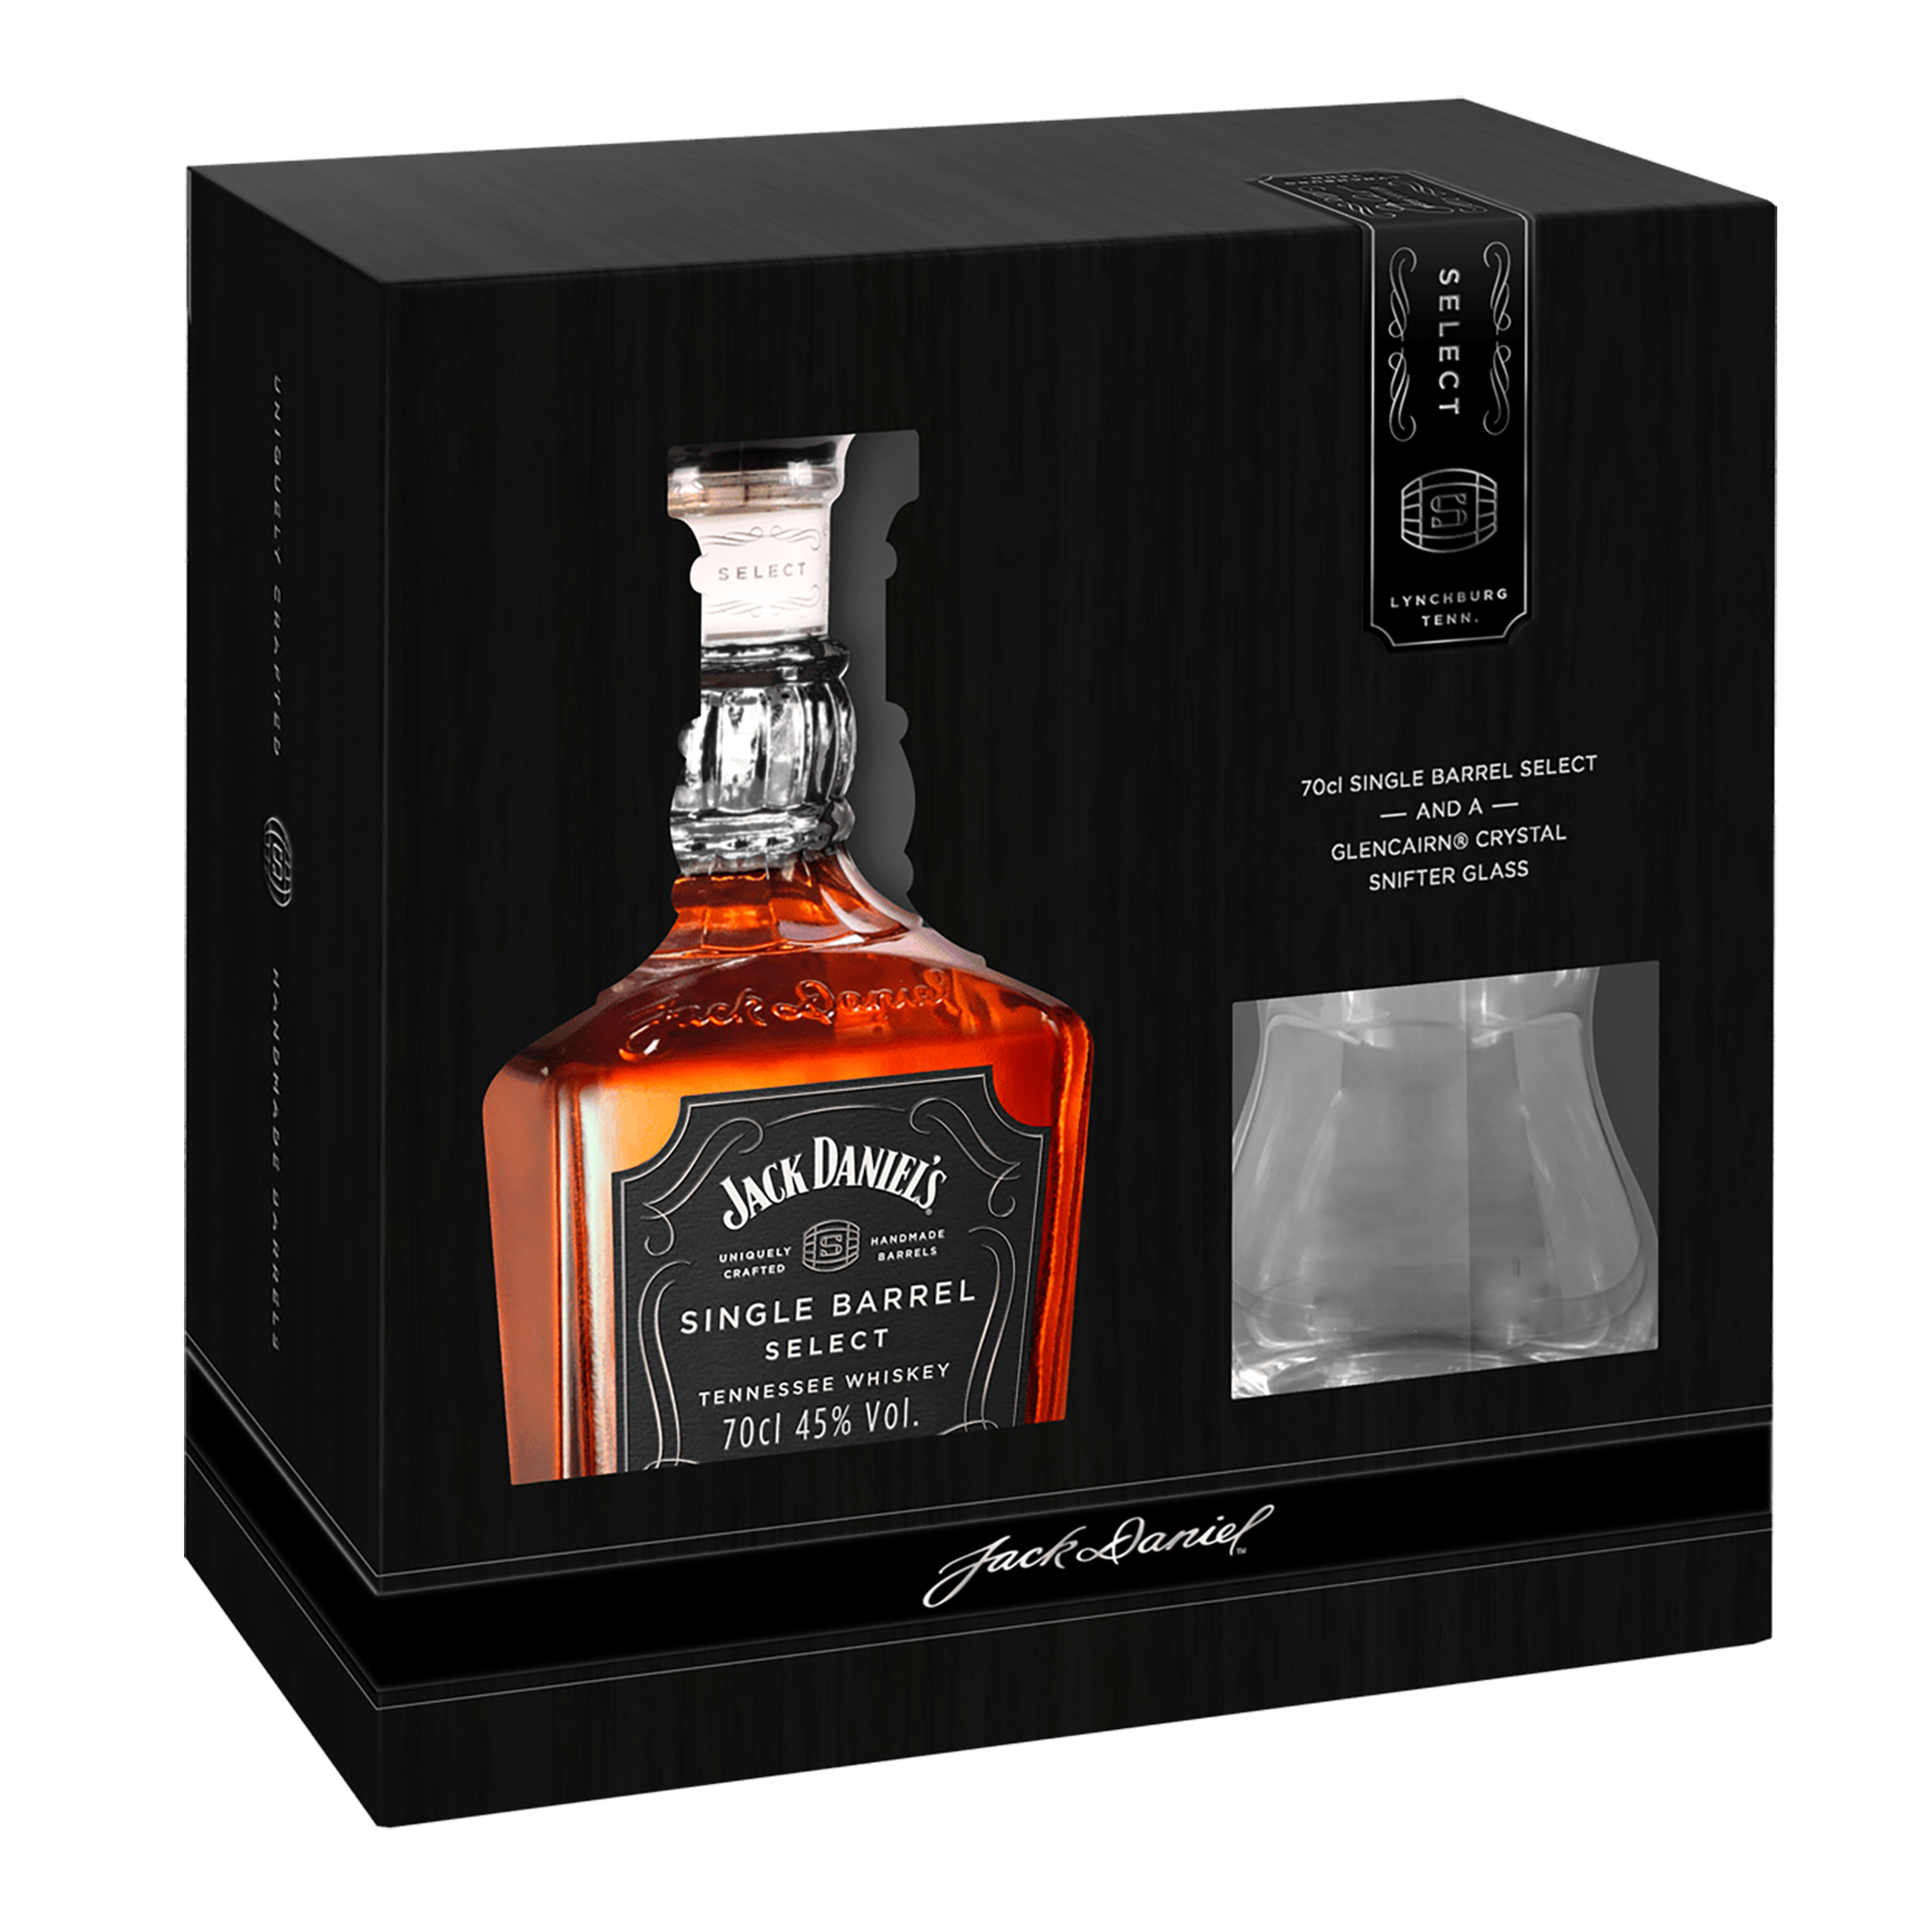 Jack Daniel's 12yr Batch 1 Premium Whiskey